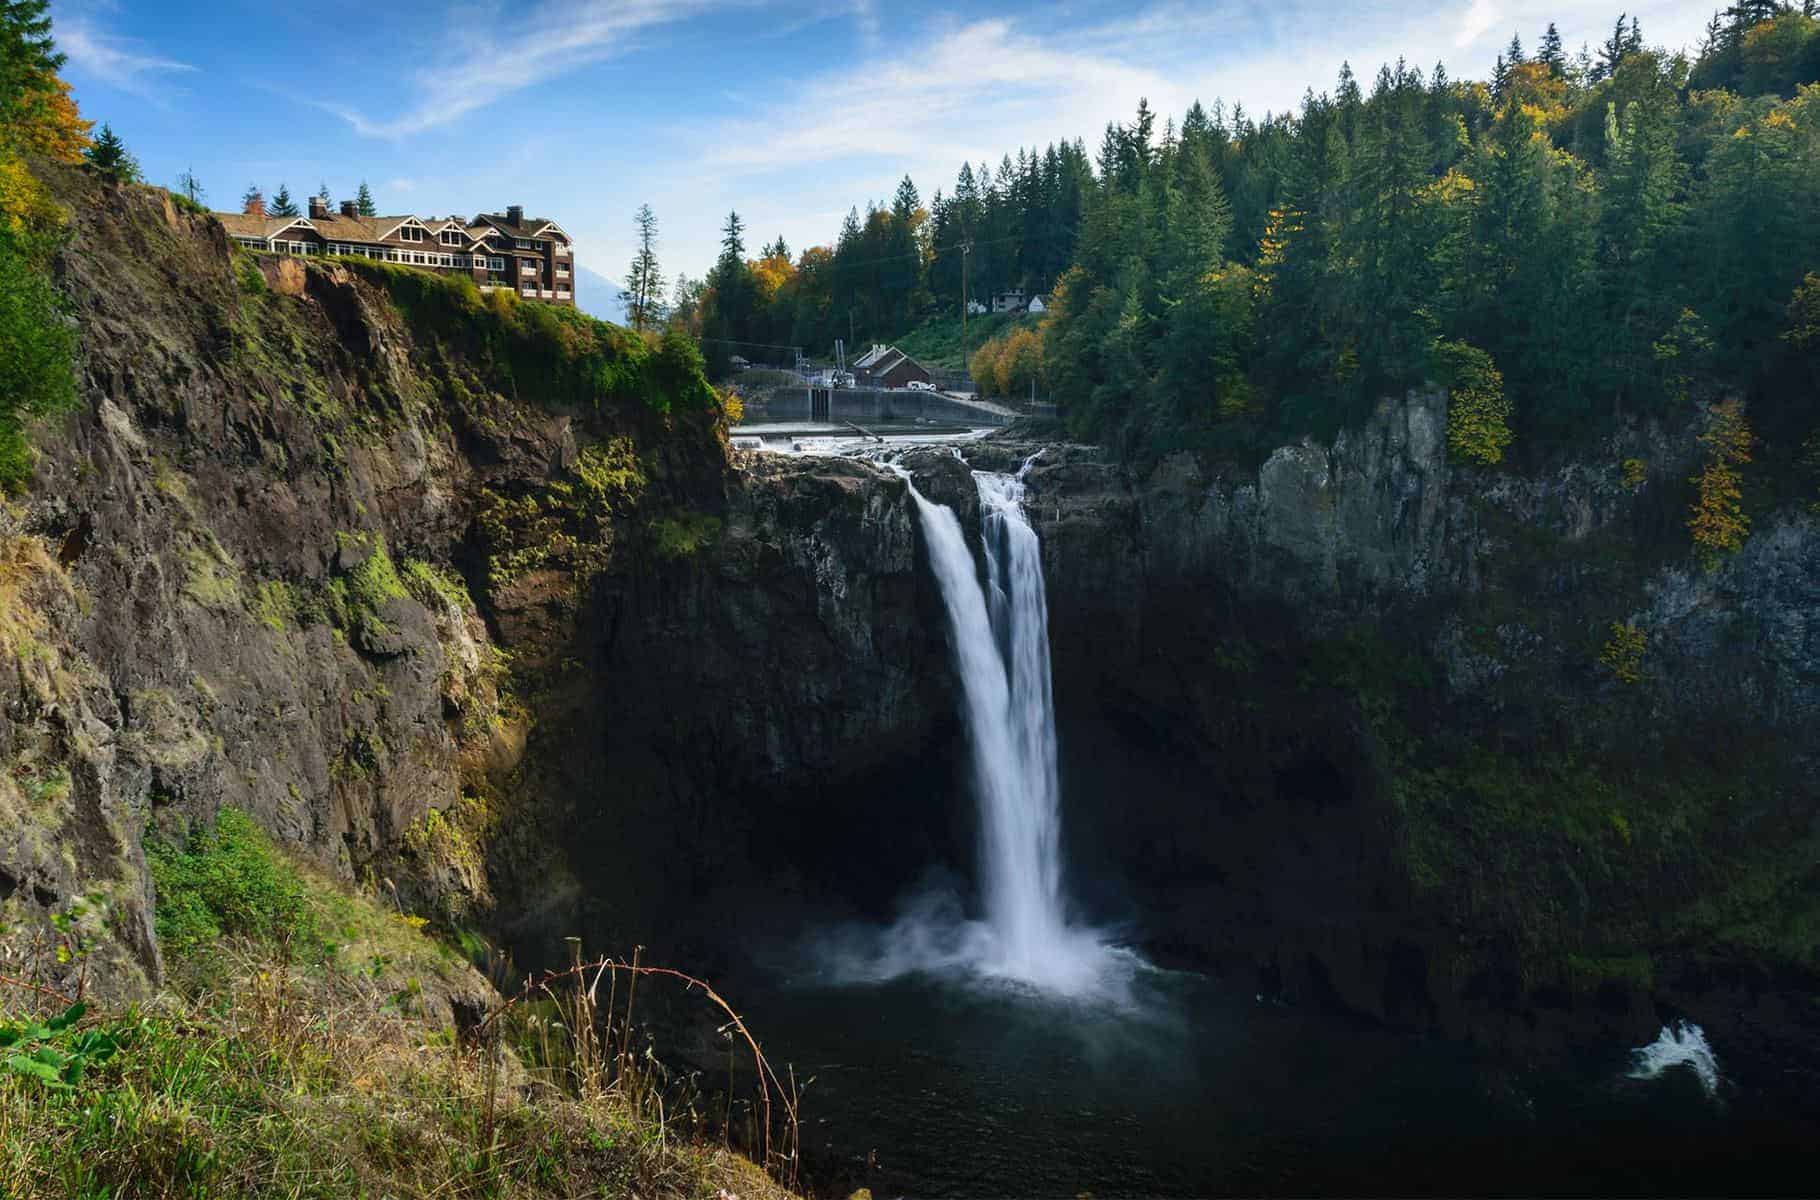 Snoqualmie, Washington State